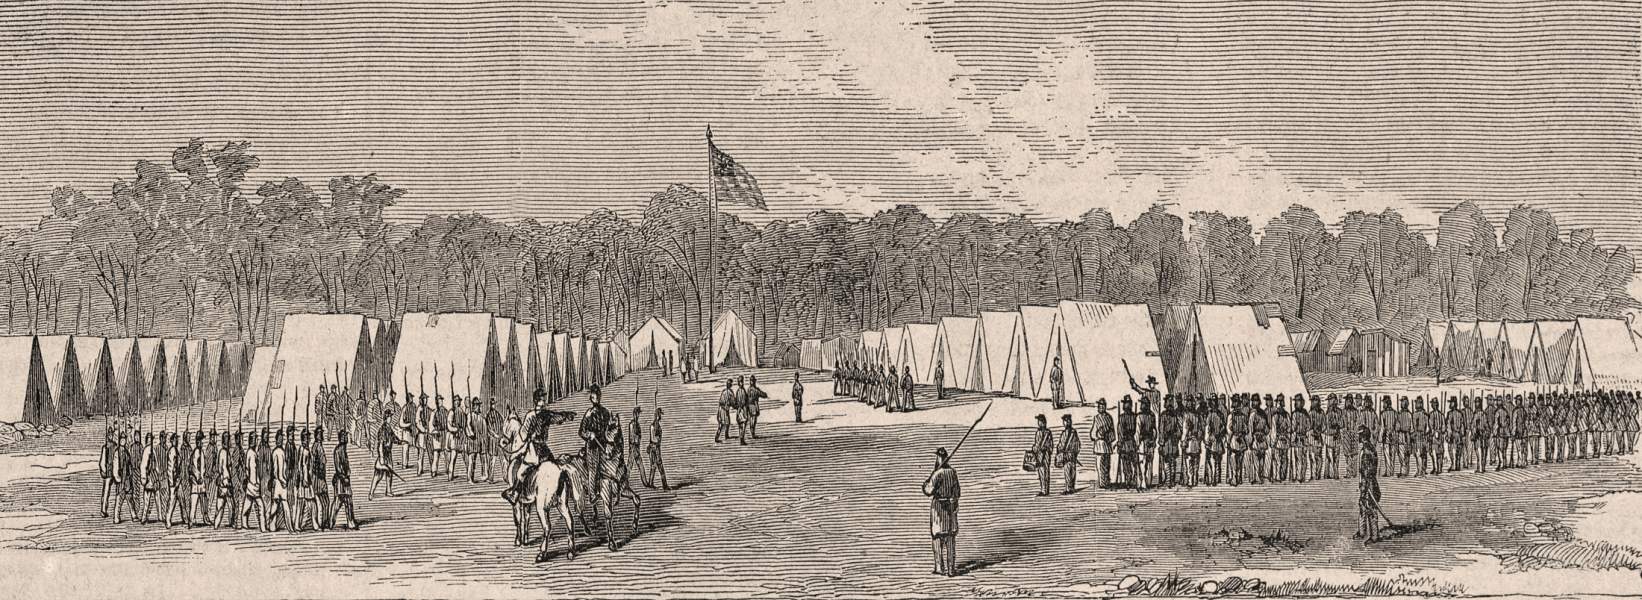 Camp Saxton, Port Royal, South Carolina, November 1862, artist's impression, zoomable image.